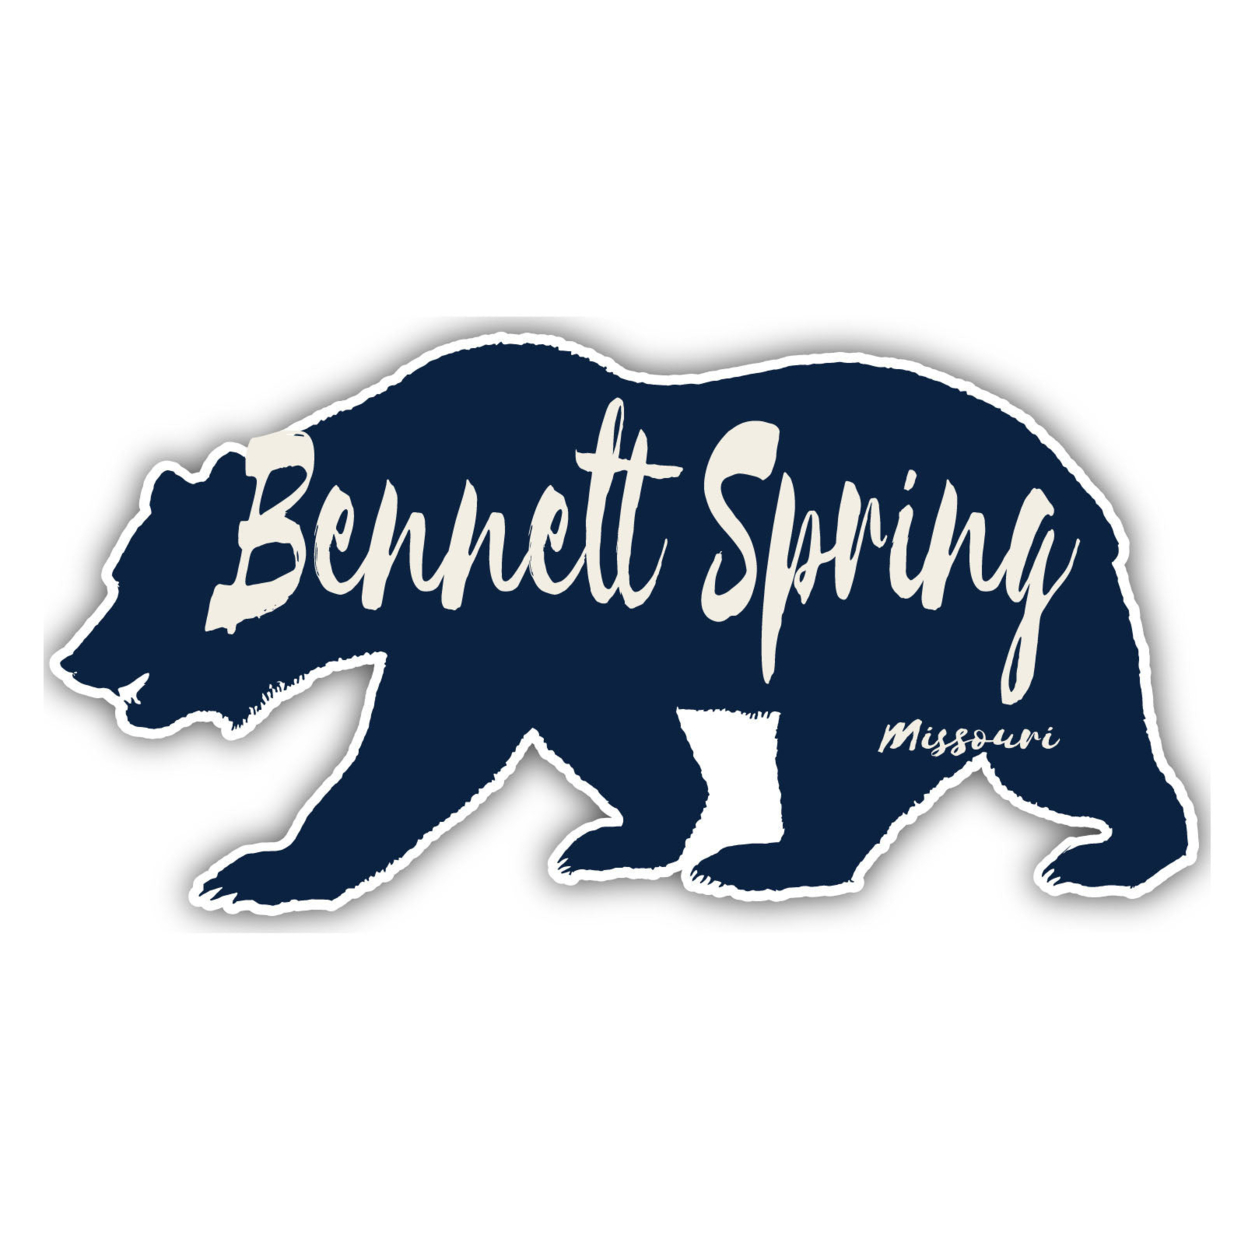 Bennett Spring Missouri Souvenir Decorative Stickers (Choose Theme And Size) - Single Unit, 4-Inch, Bear